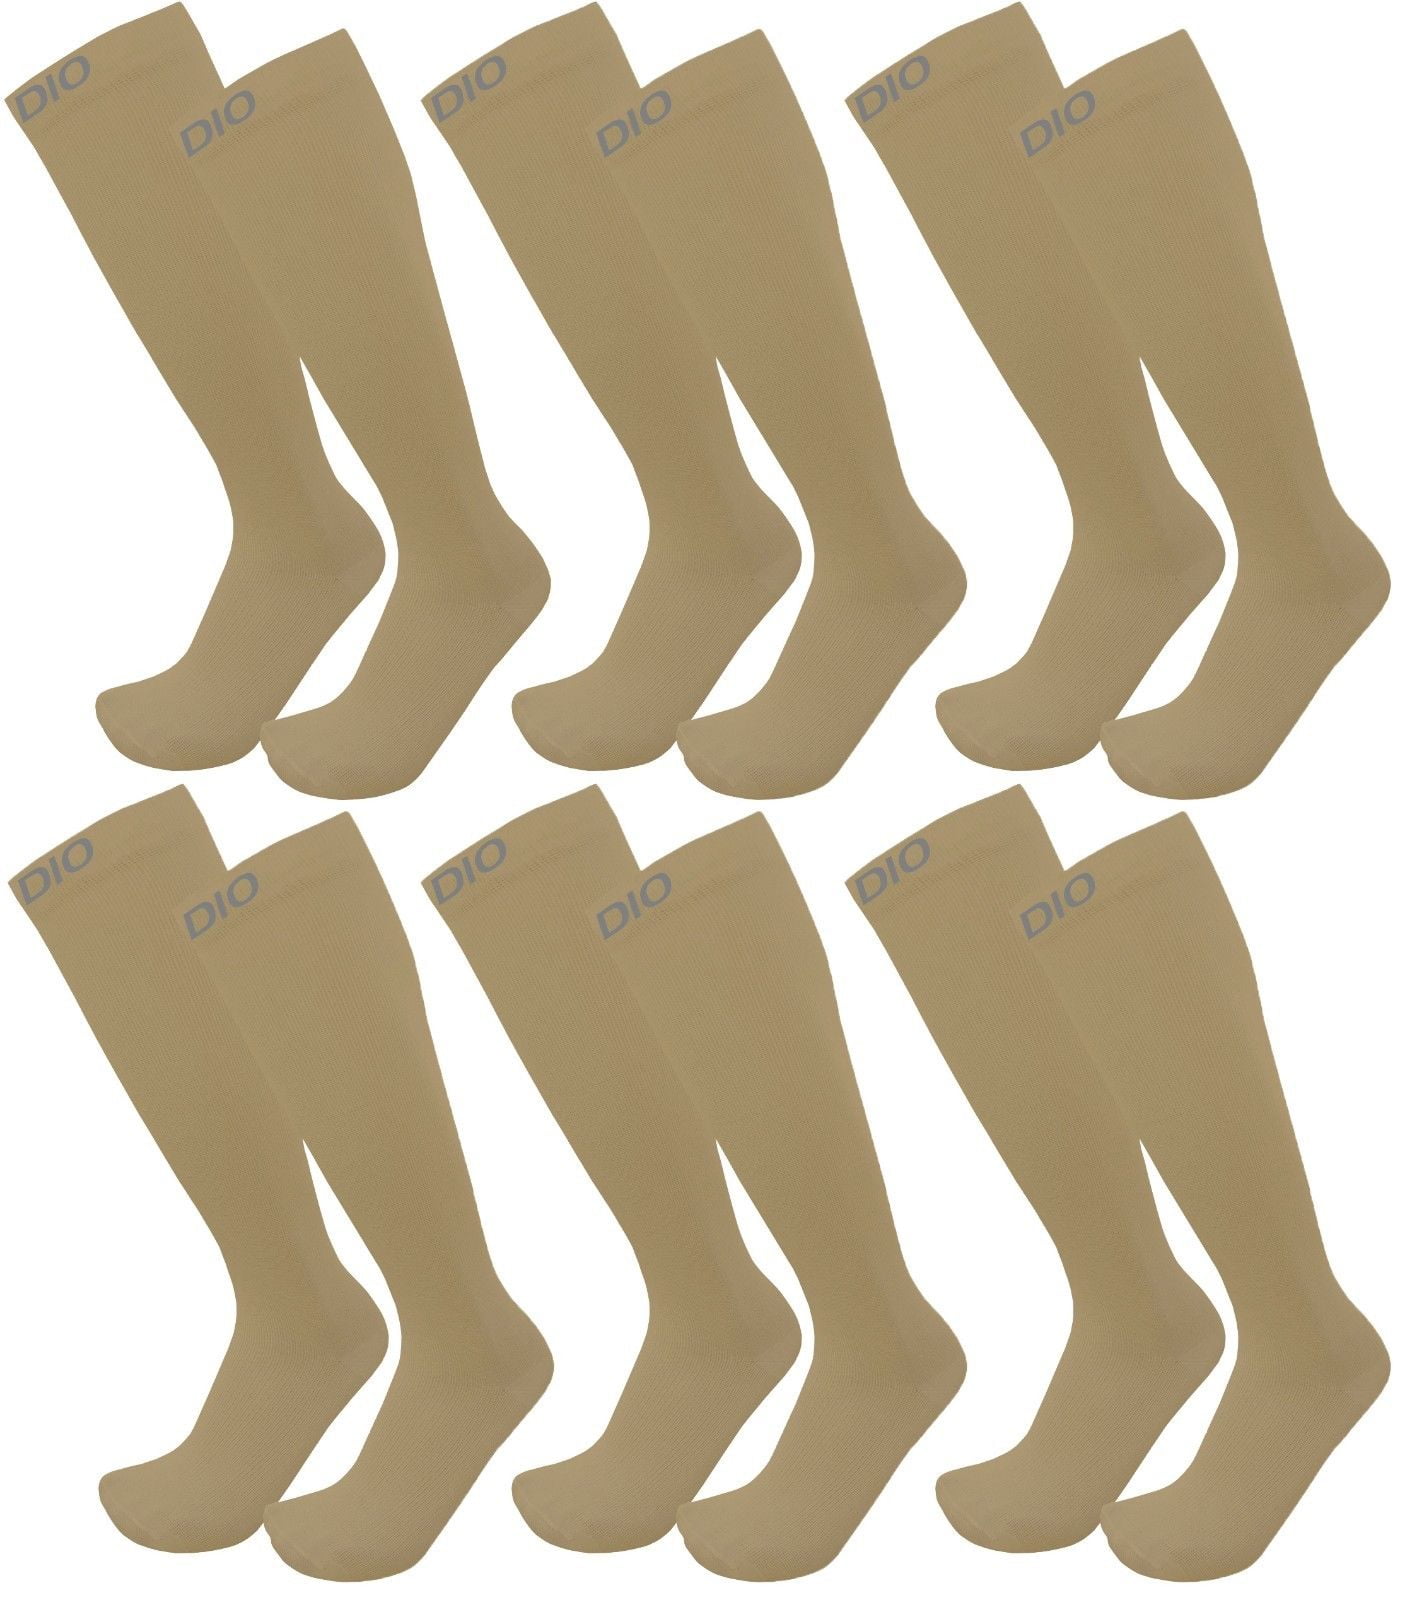 Fitdio Compression Socks Size Chart